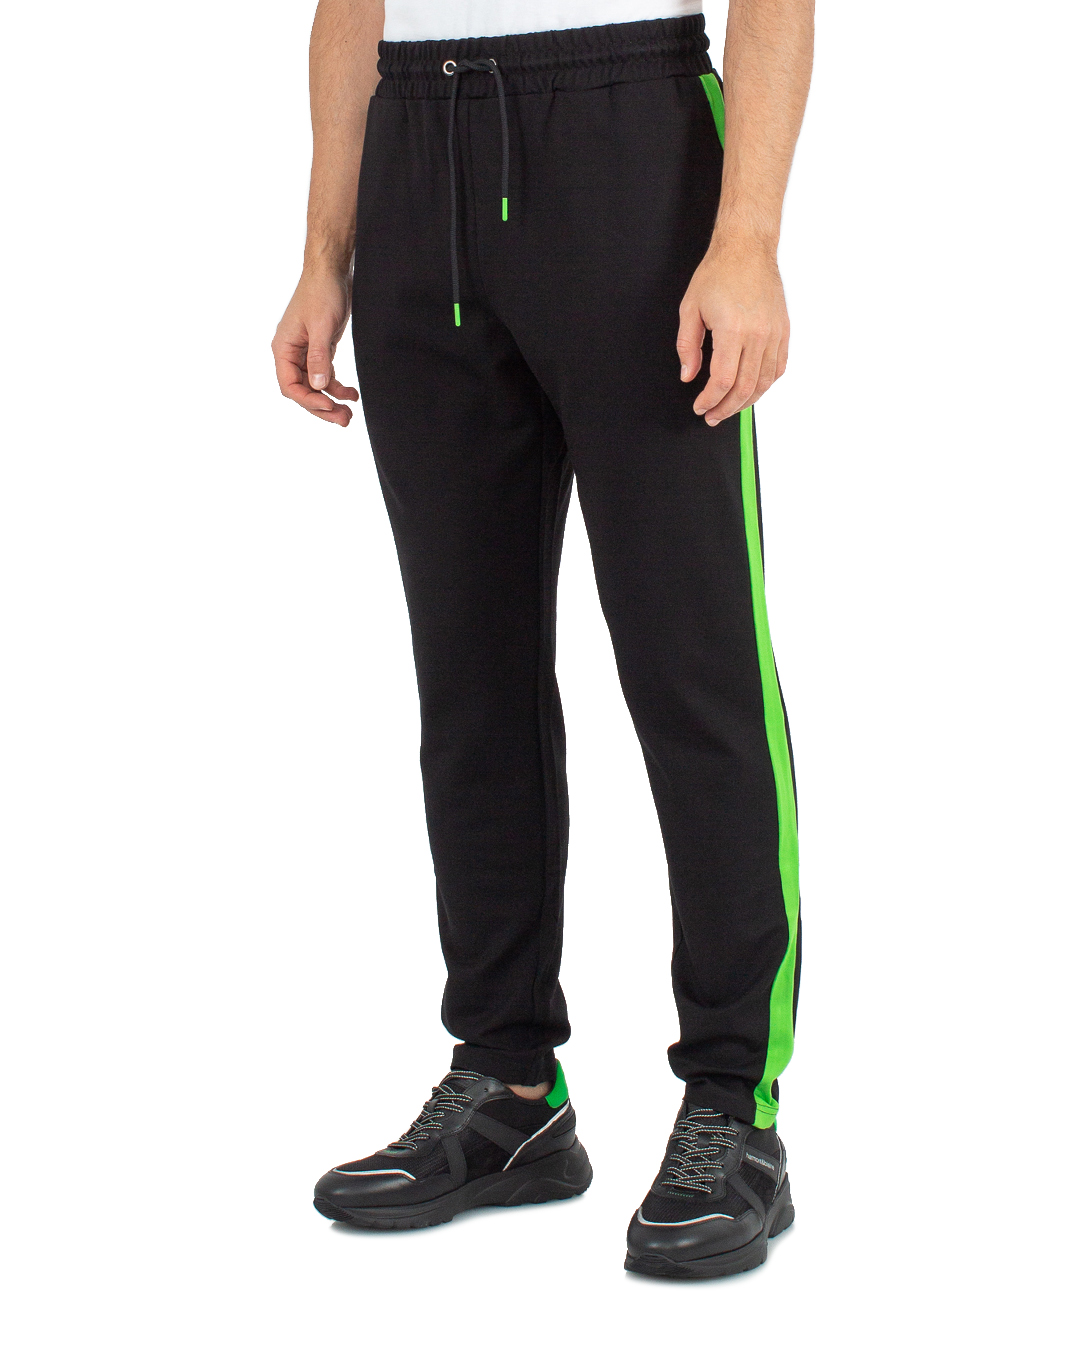 брюки Harmont & Blaine FRK155 черный+зеленый l, размер l, цвет черный+зеленый FRK155 черный+зеленый l - фото 3